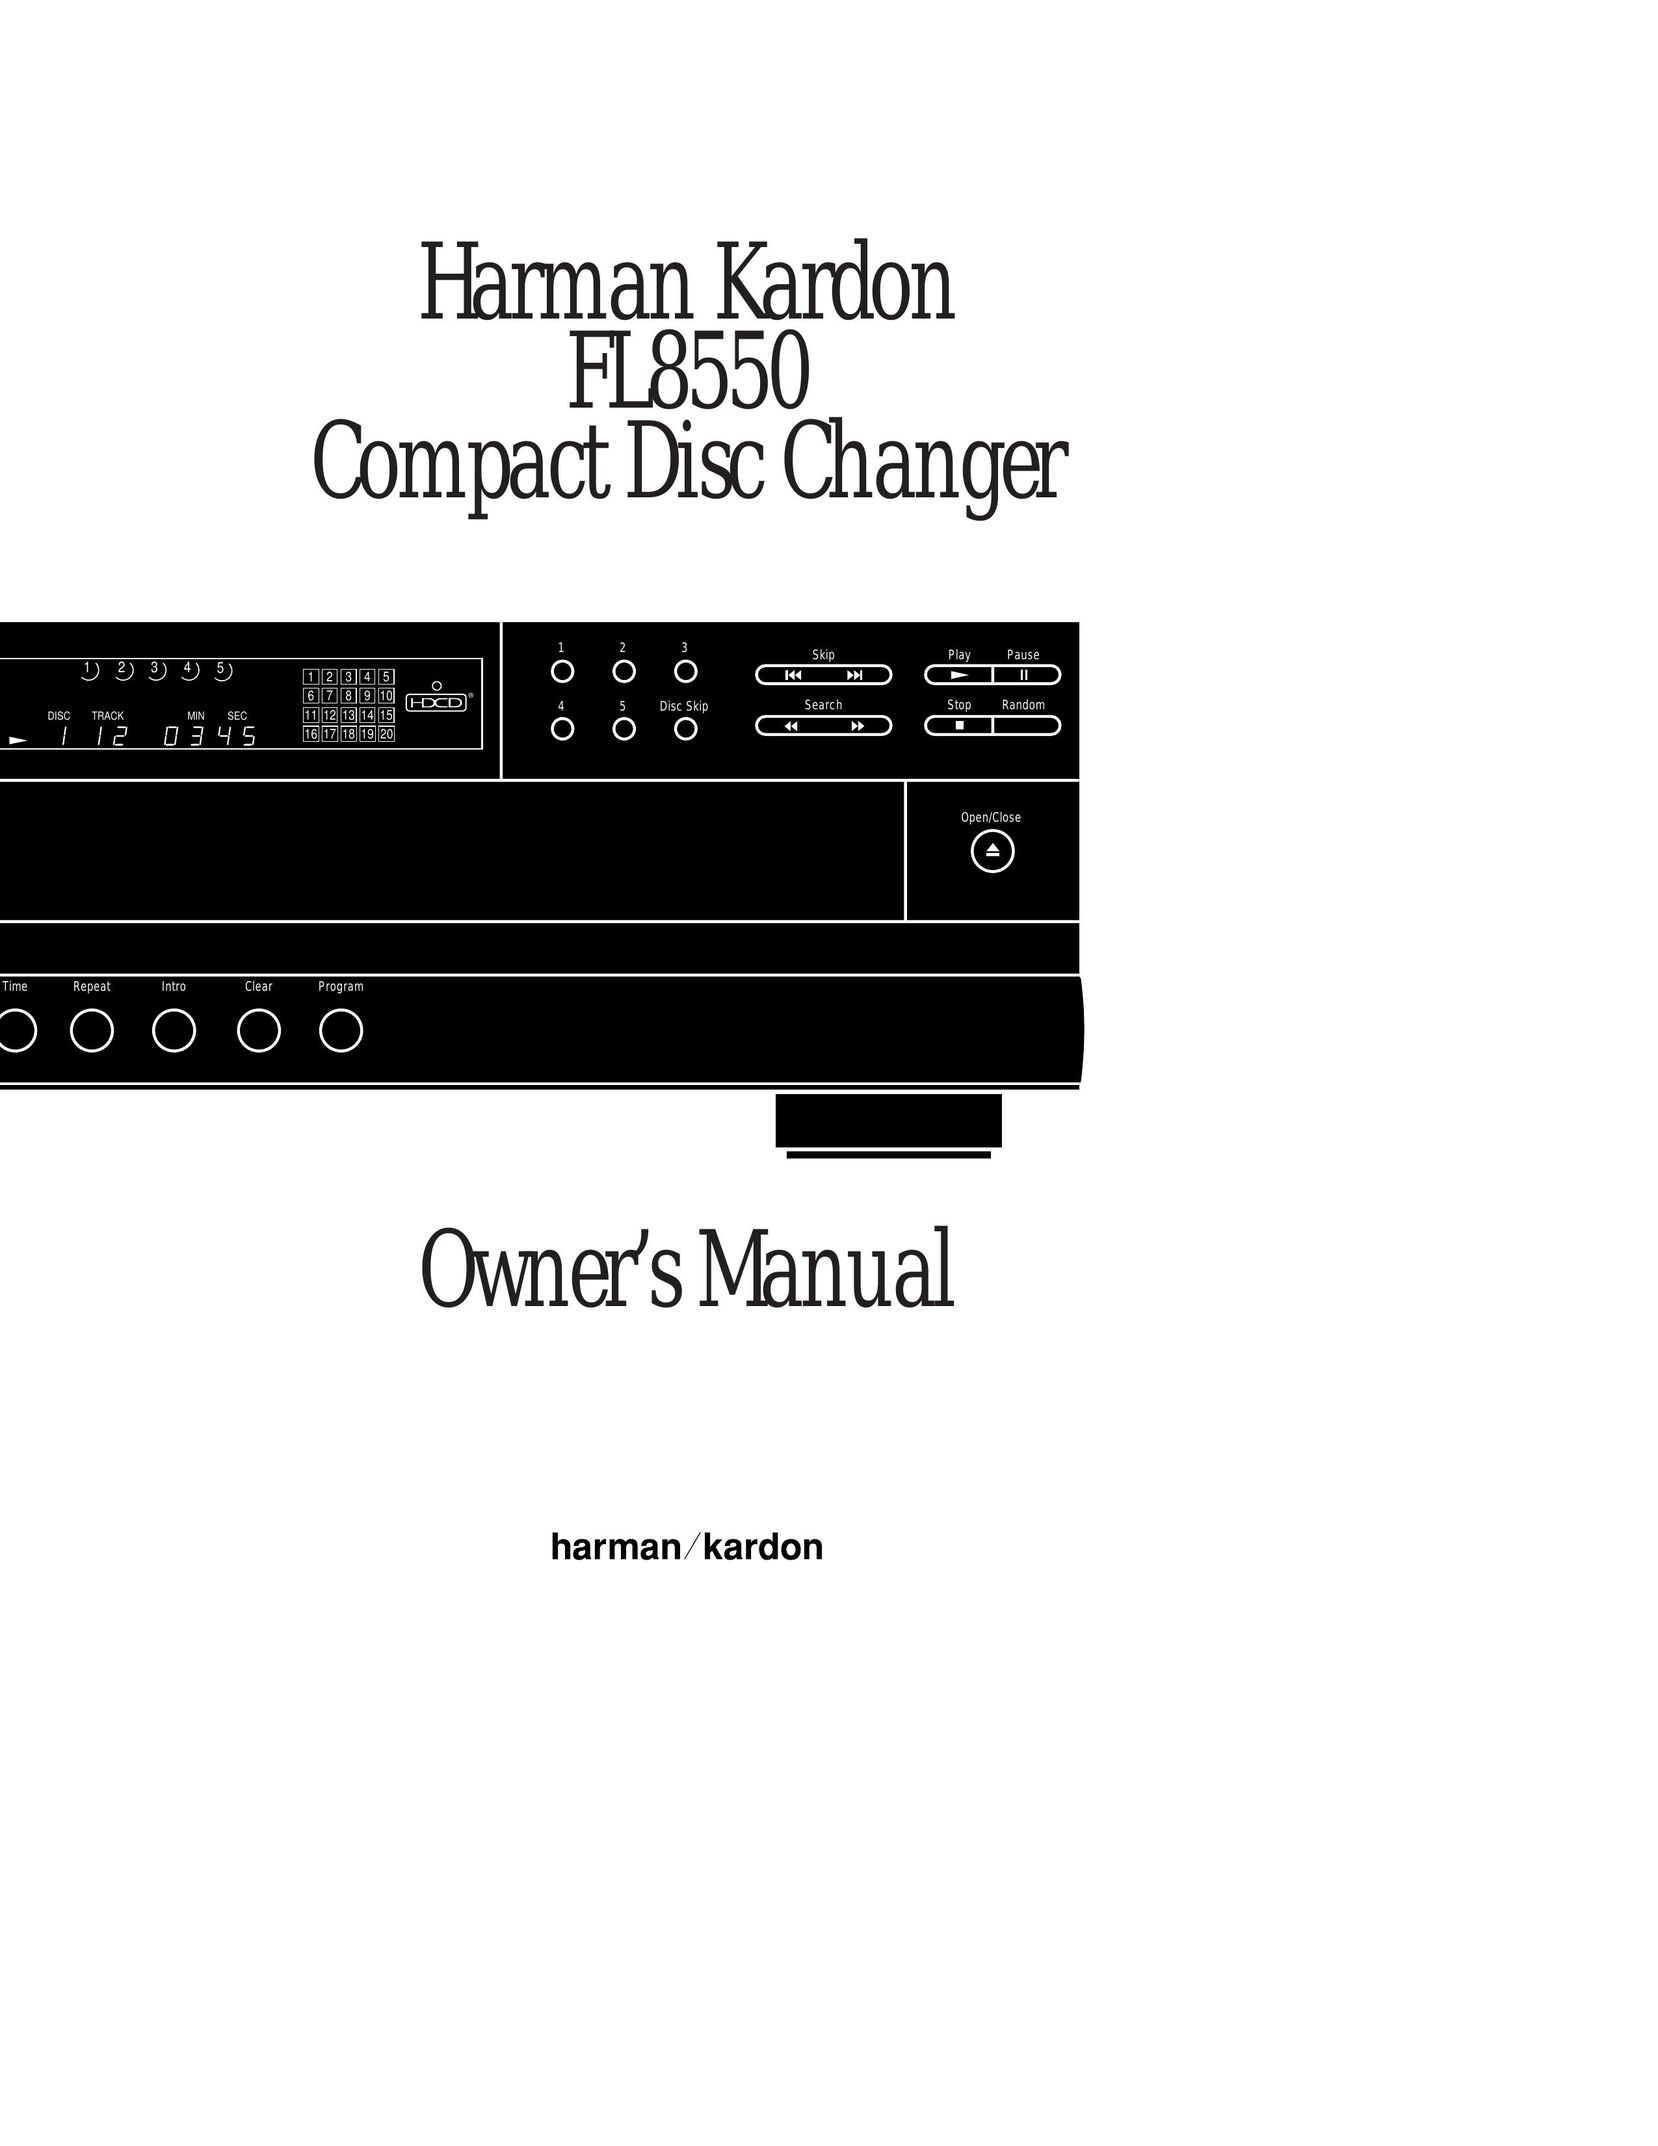 Harman-Kardon FL8550 CD Player User Manual